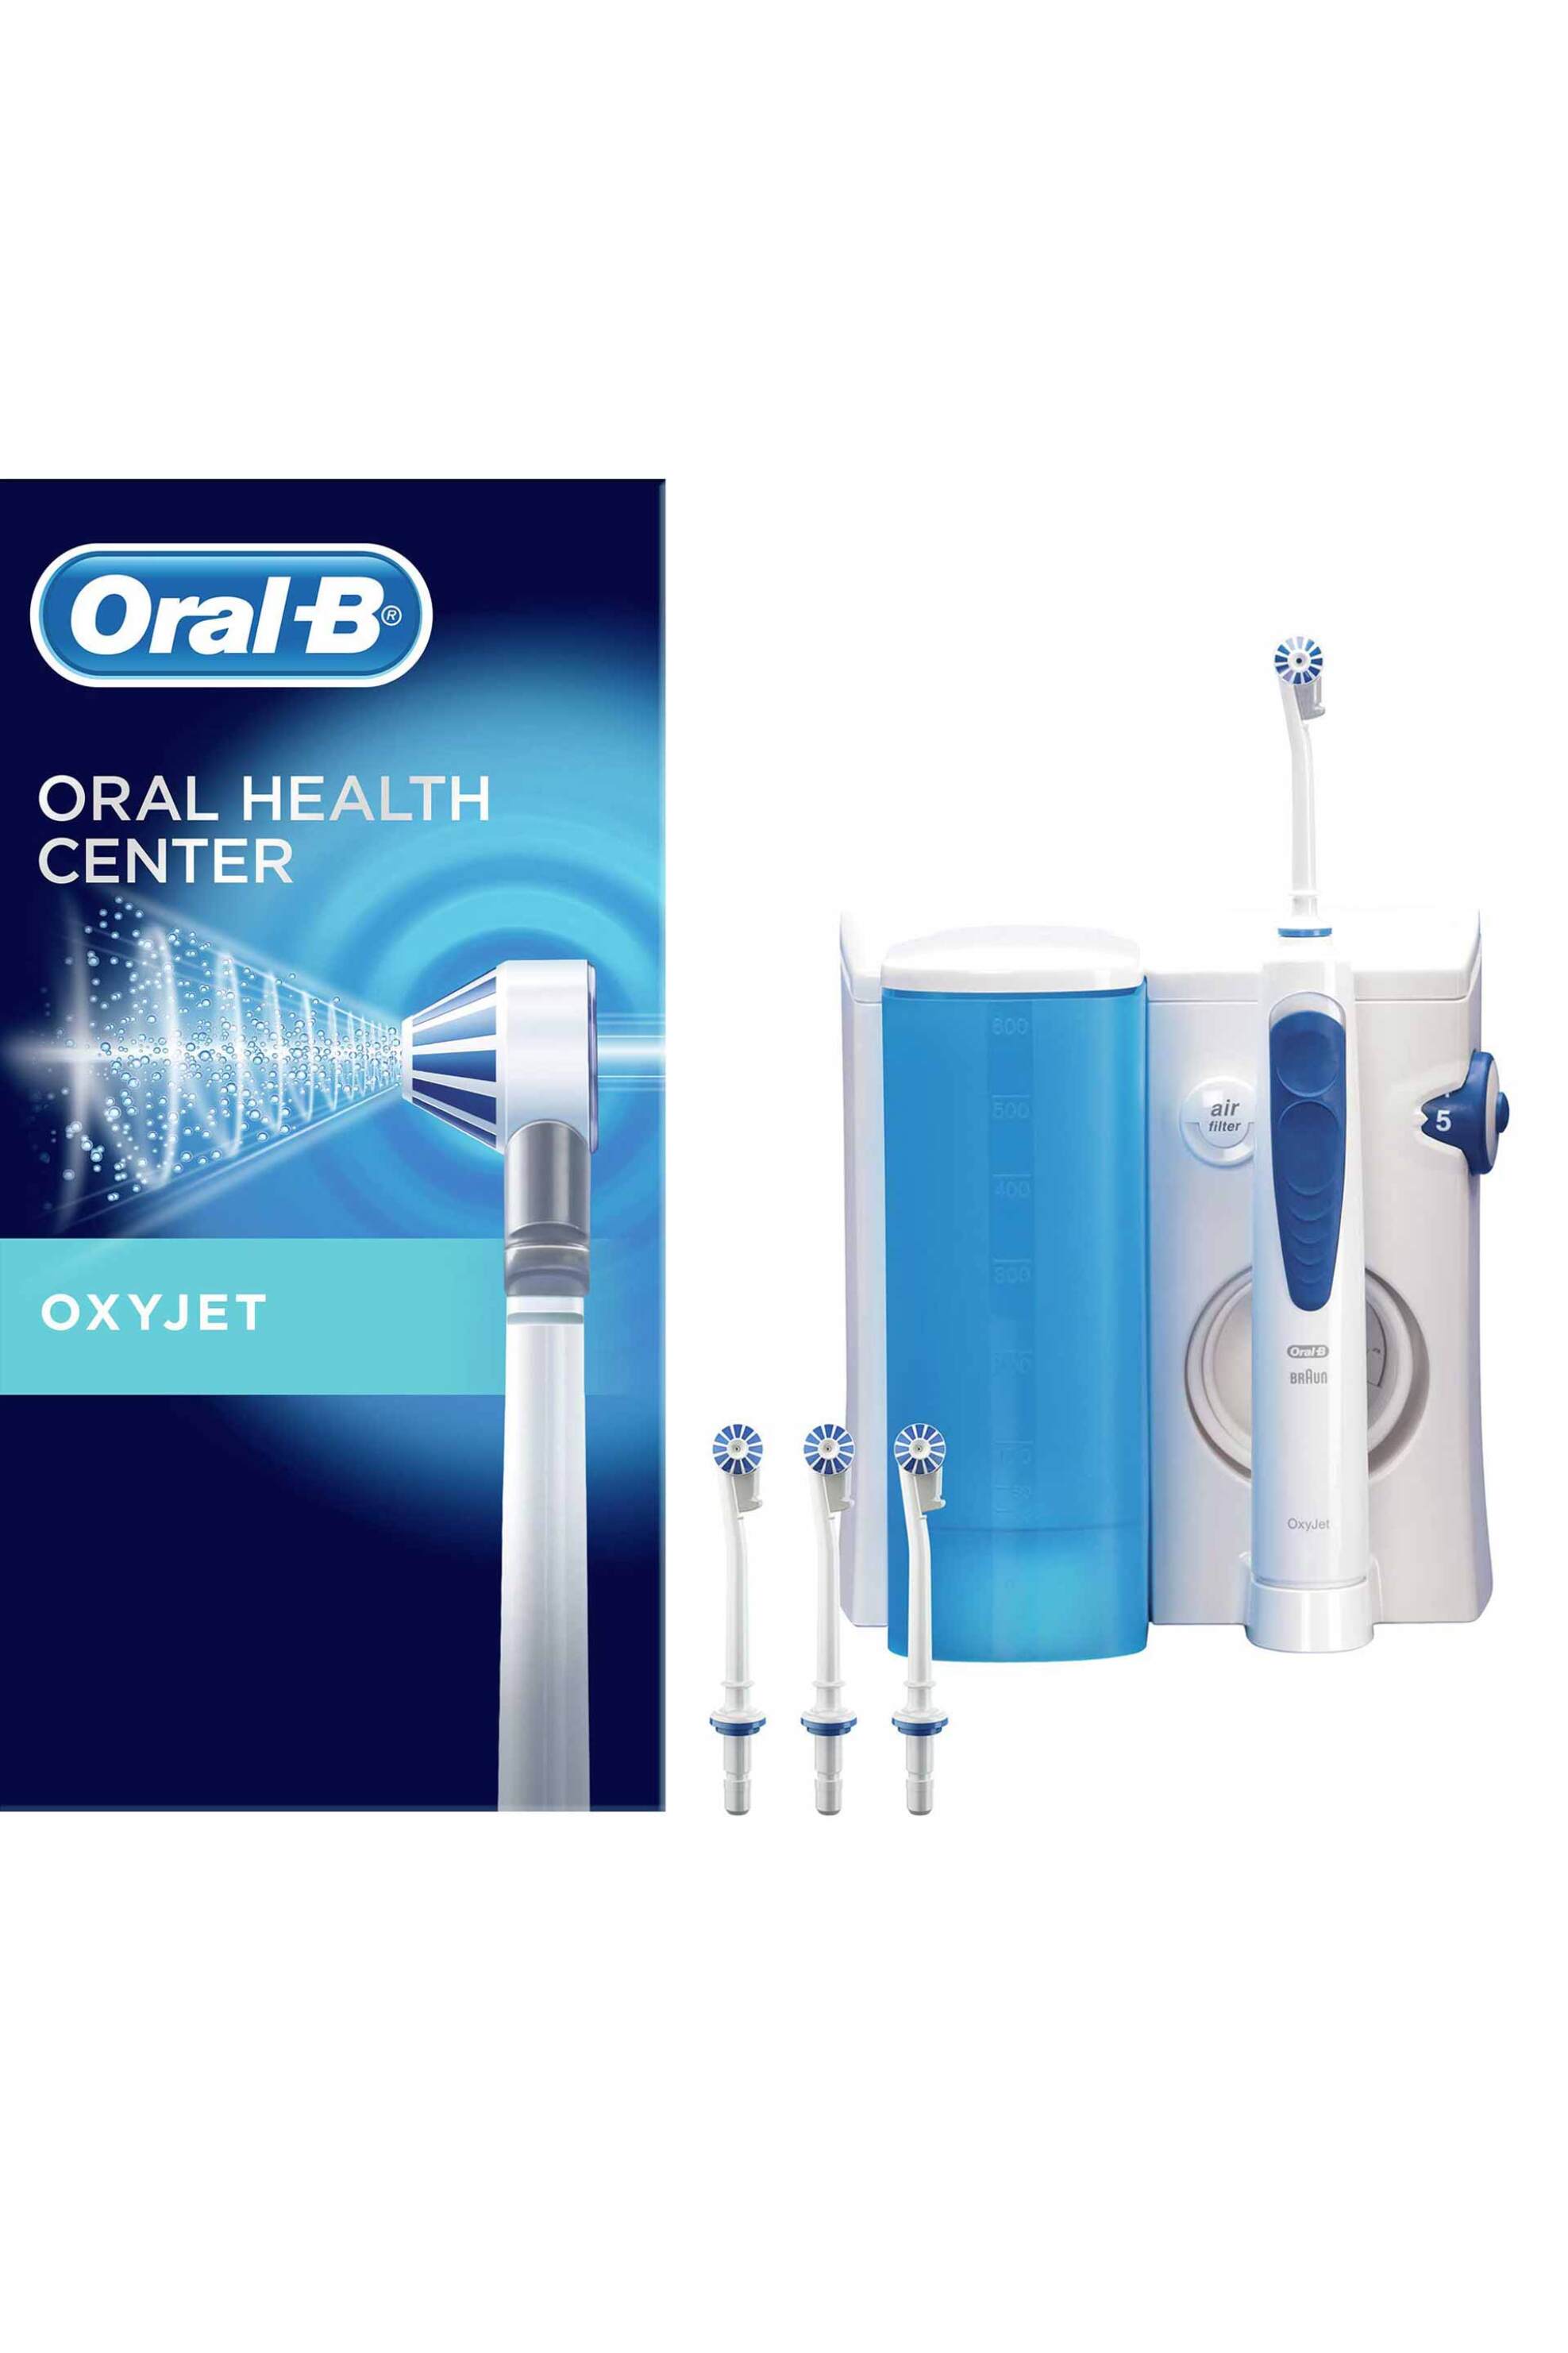 Home > ΣΥΣΚΕΥΕΣ ΠΕΡΙΠΟΙΗΣΗΣ > Ηλεκτρικές Οδοντόβουρτσες Braun συσκευή καταιονισμού εκτόξευσης νερού "Oral-B Oxyjet Oral Health" - 80372258